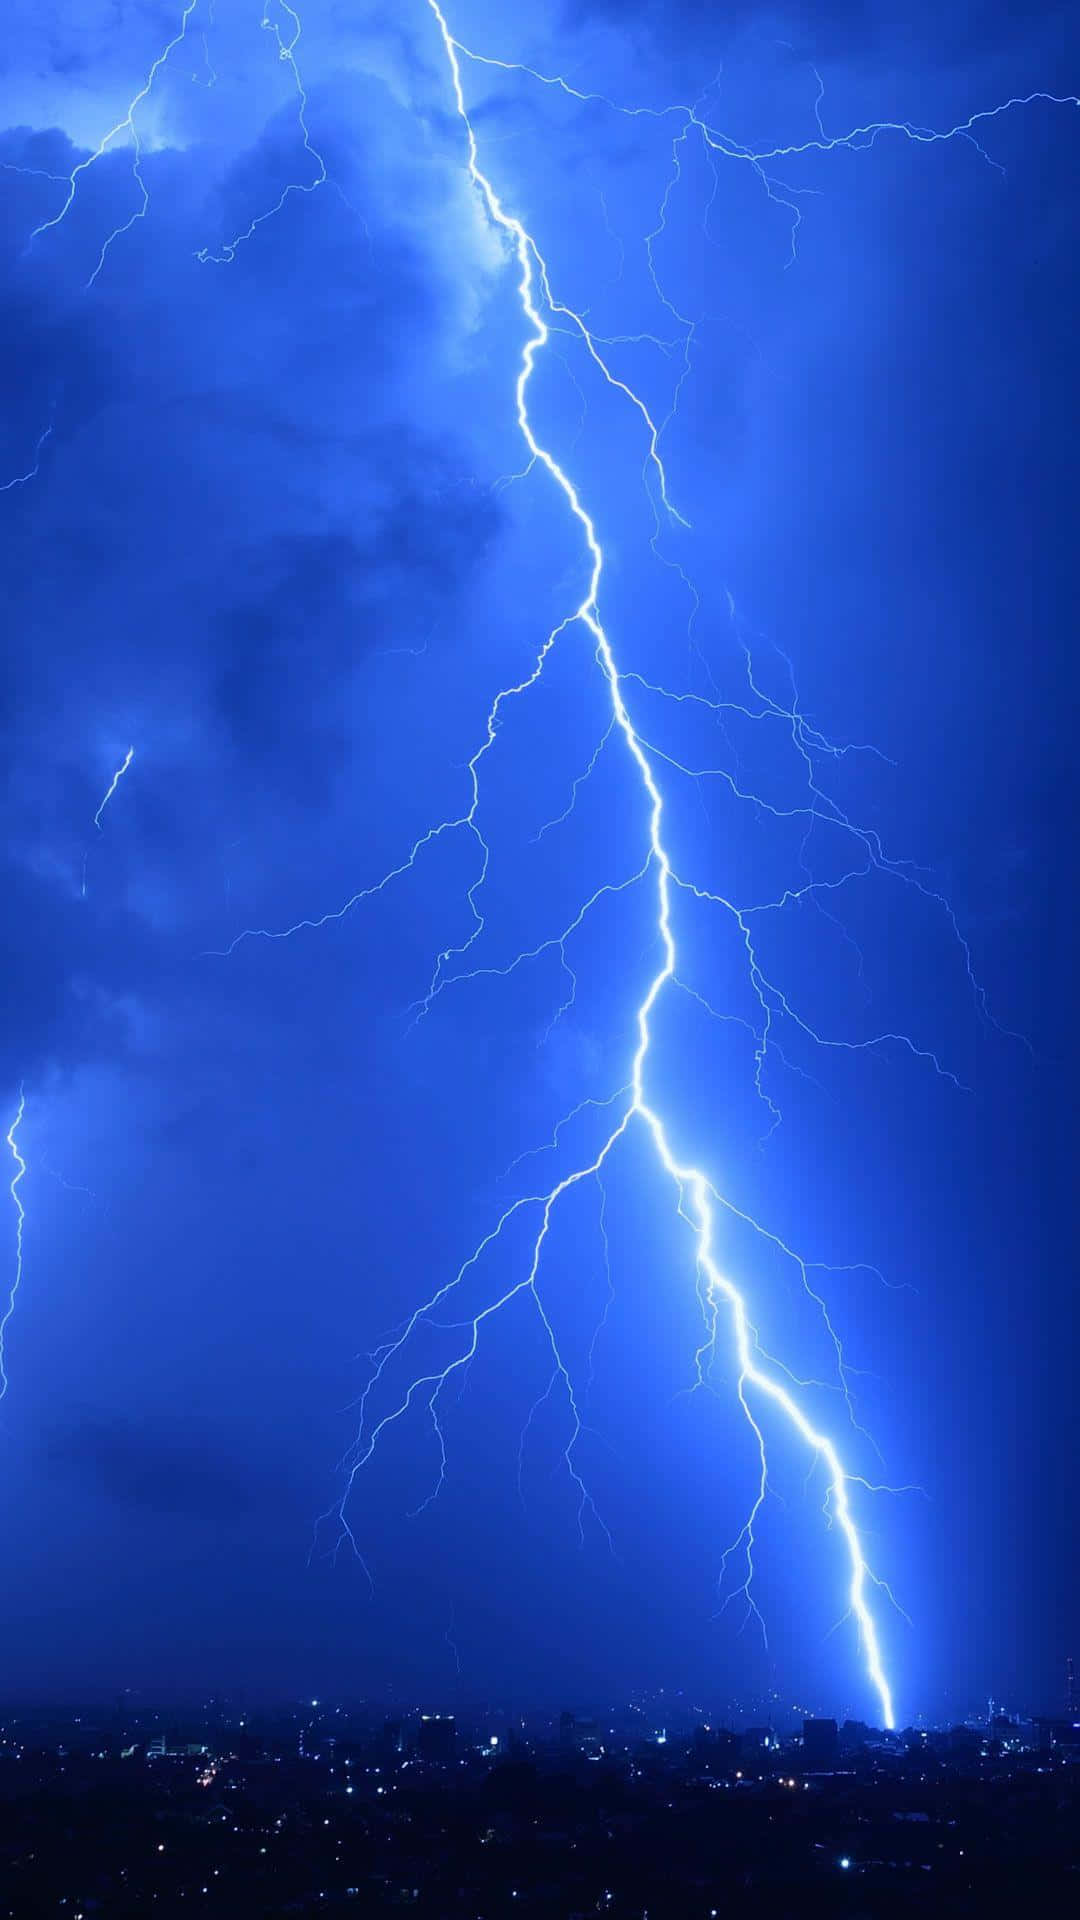 Intense Lightning Strike Over City Night Sky Wallpaper